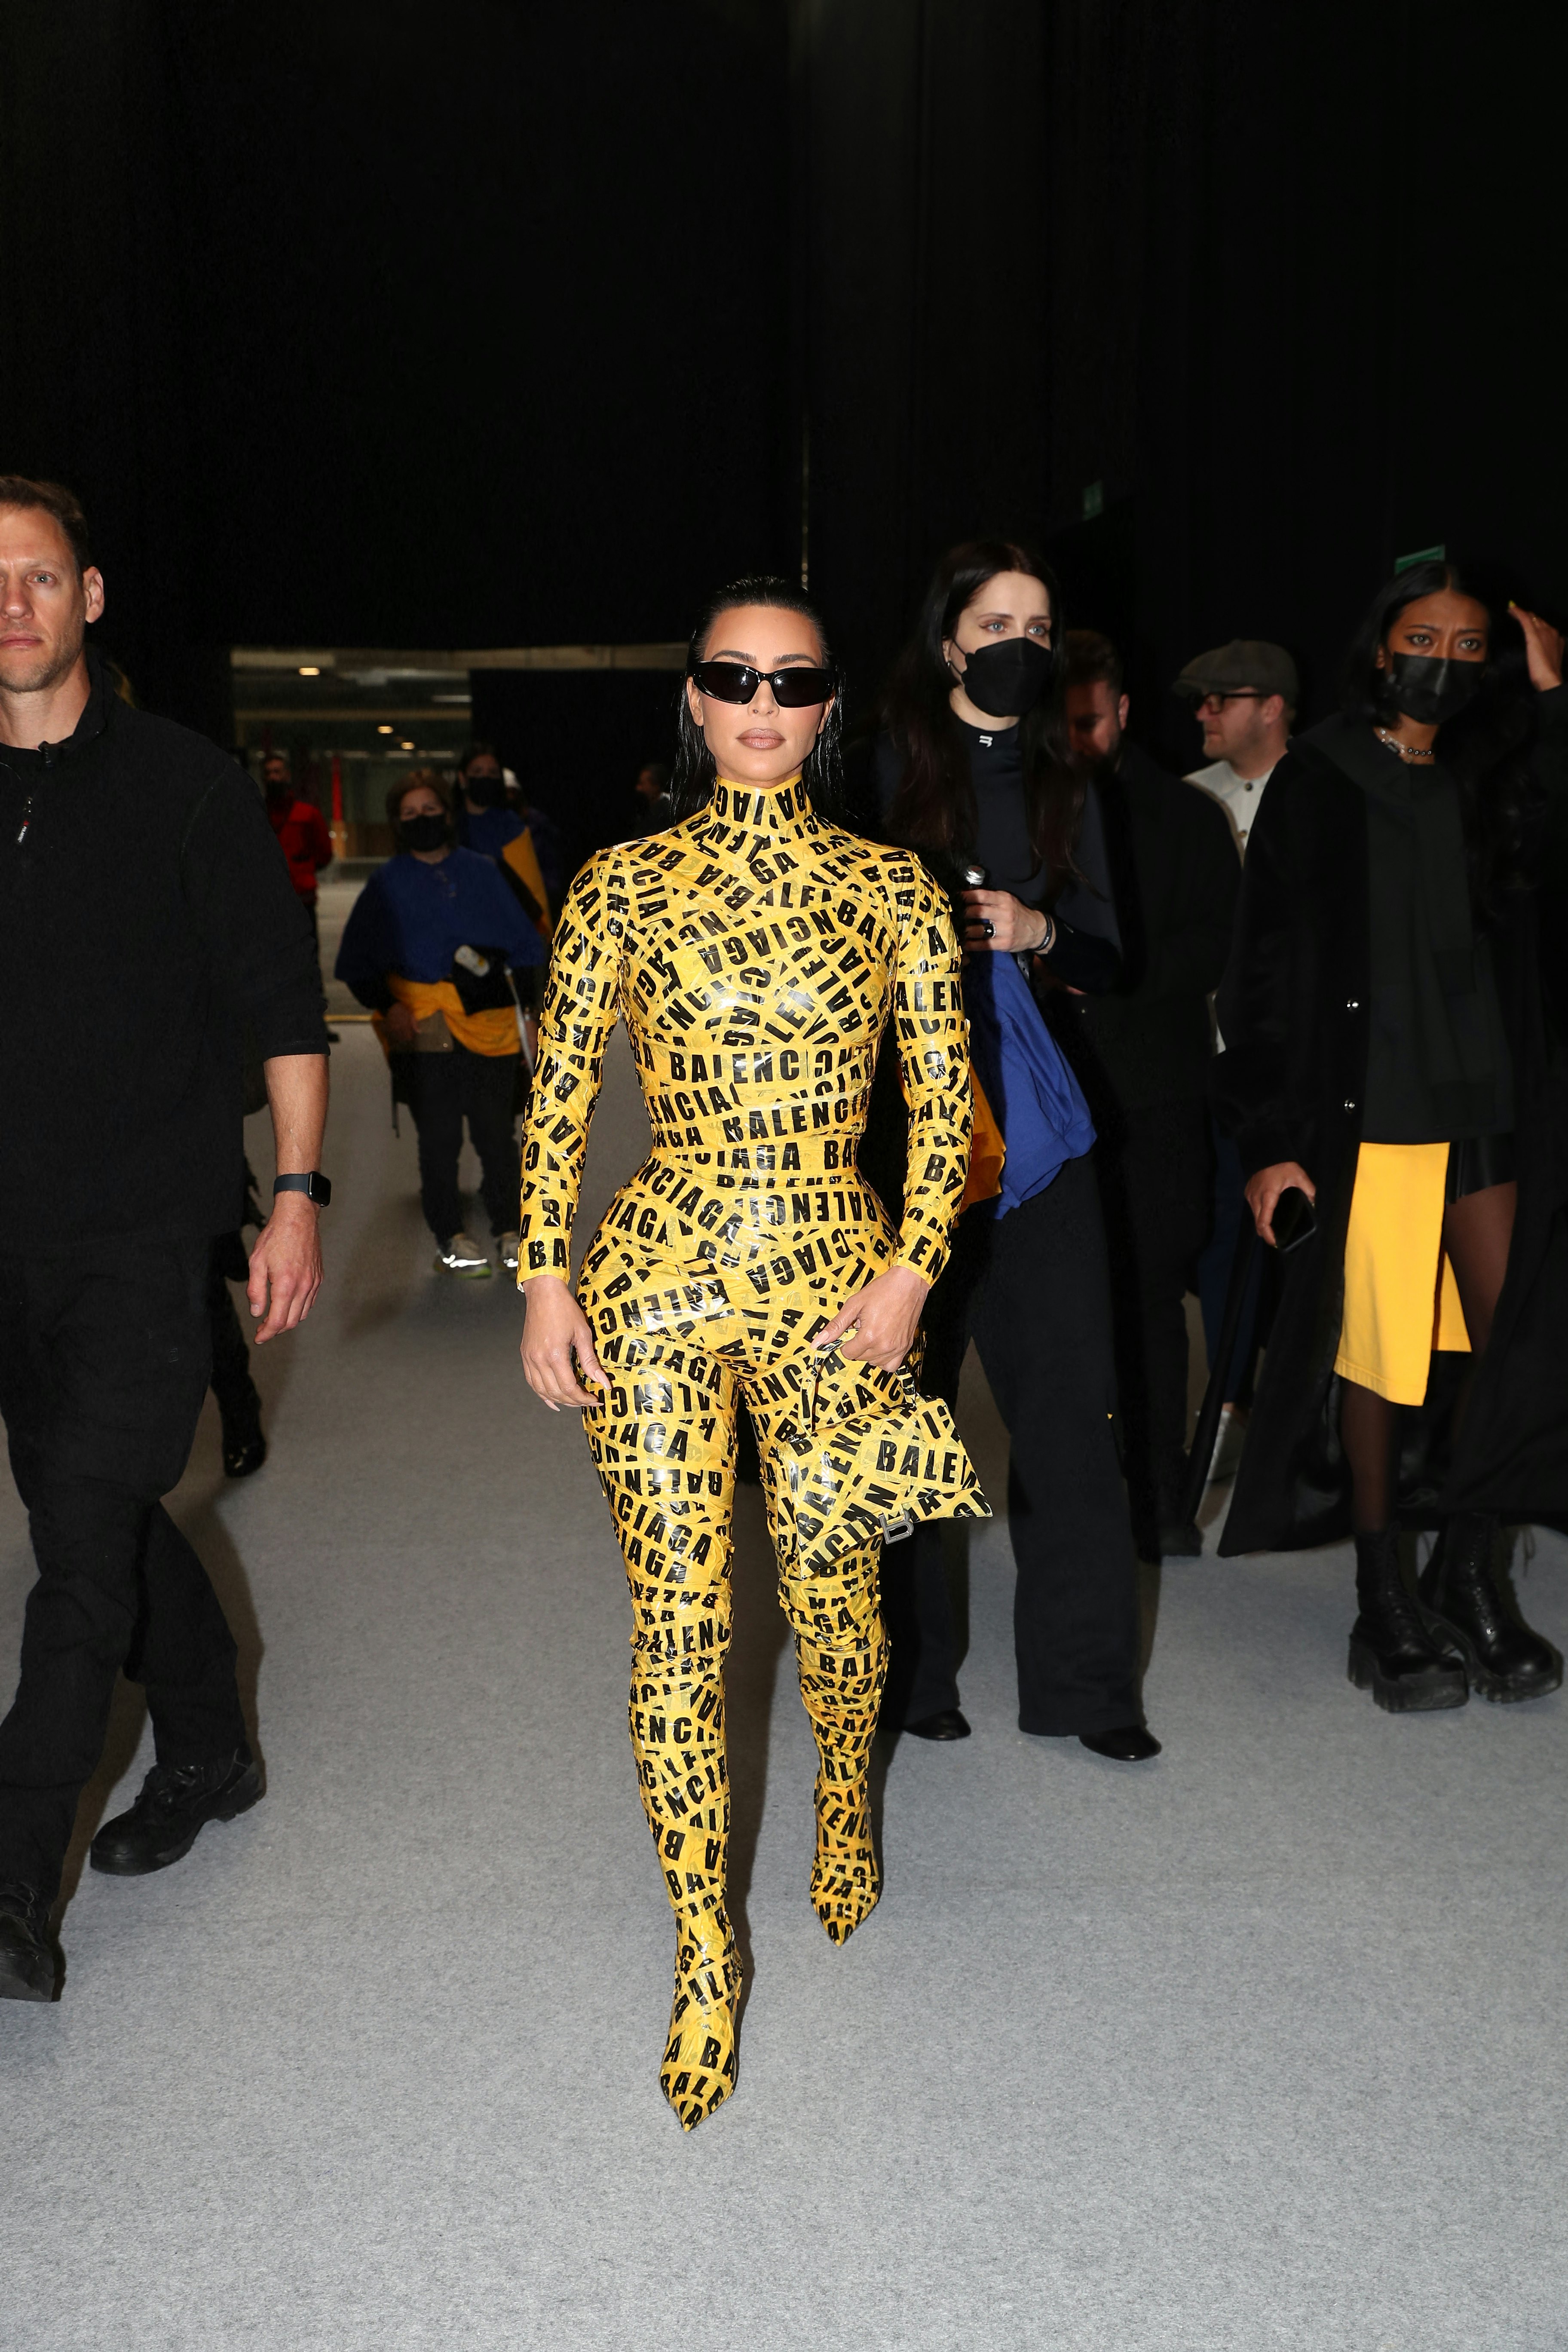 Kim Kardashian Struggling to Walk in Balenciaga Caution Tape Viewed Over  4M Times